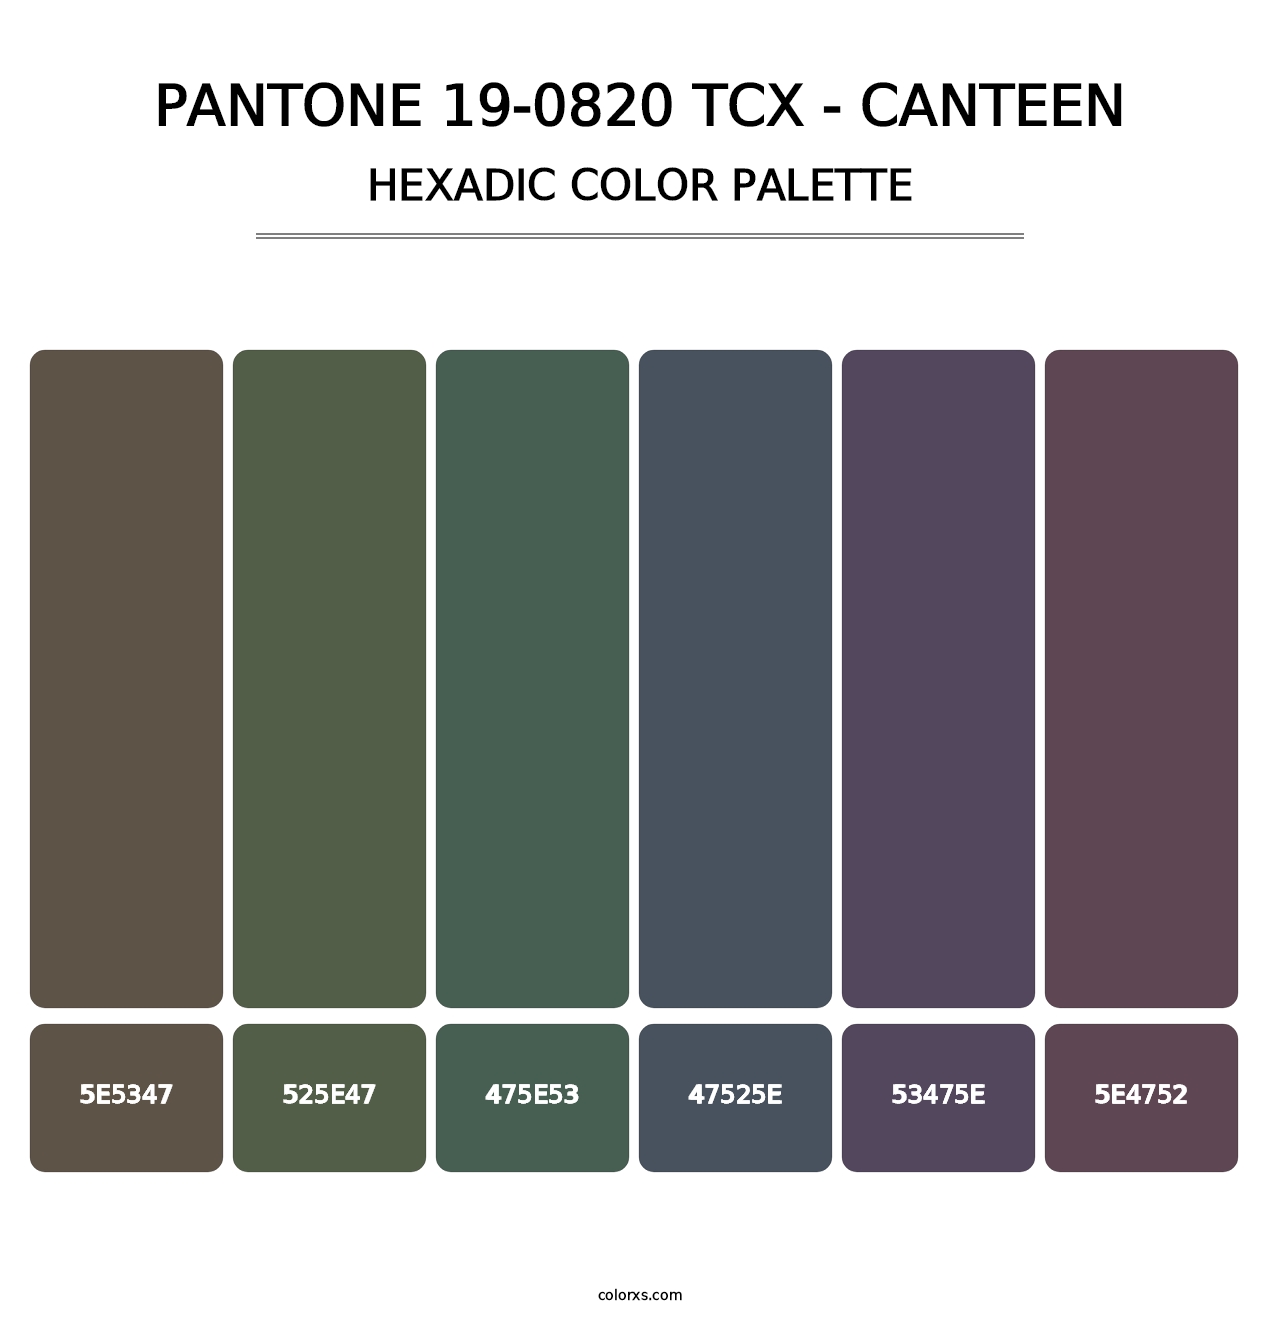 PANTONE 19-0820 TCX - Canteen - Hexadic Color Palette